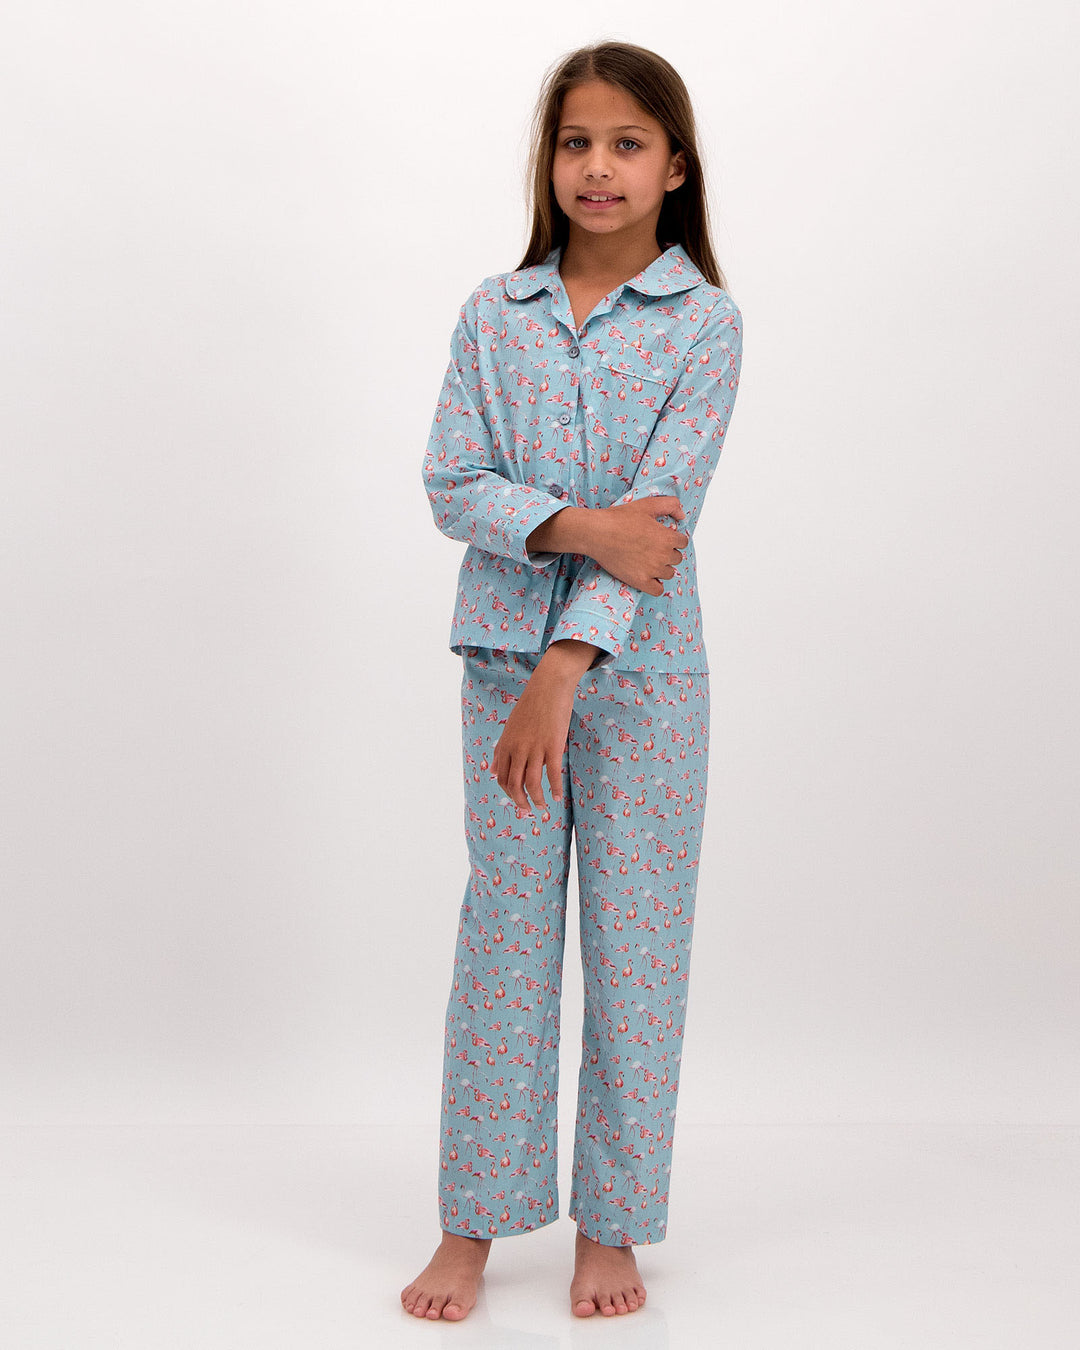 Girls Long Pyjamas - Woodstock Laundry UK